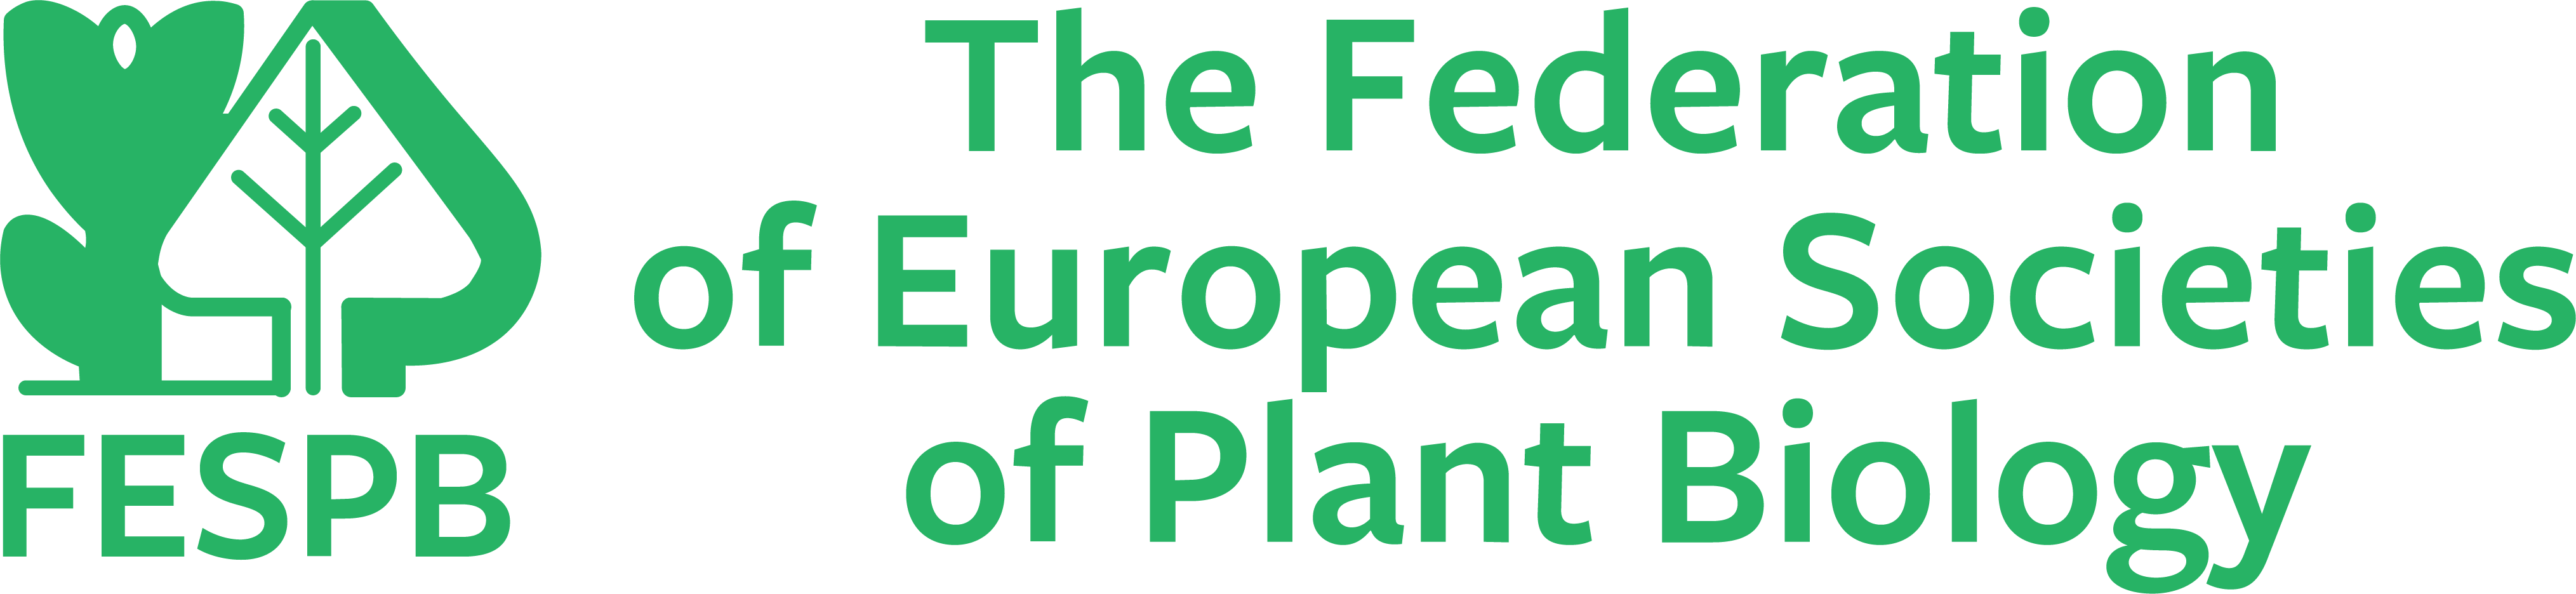 fesbp logo green